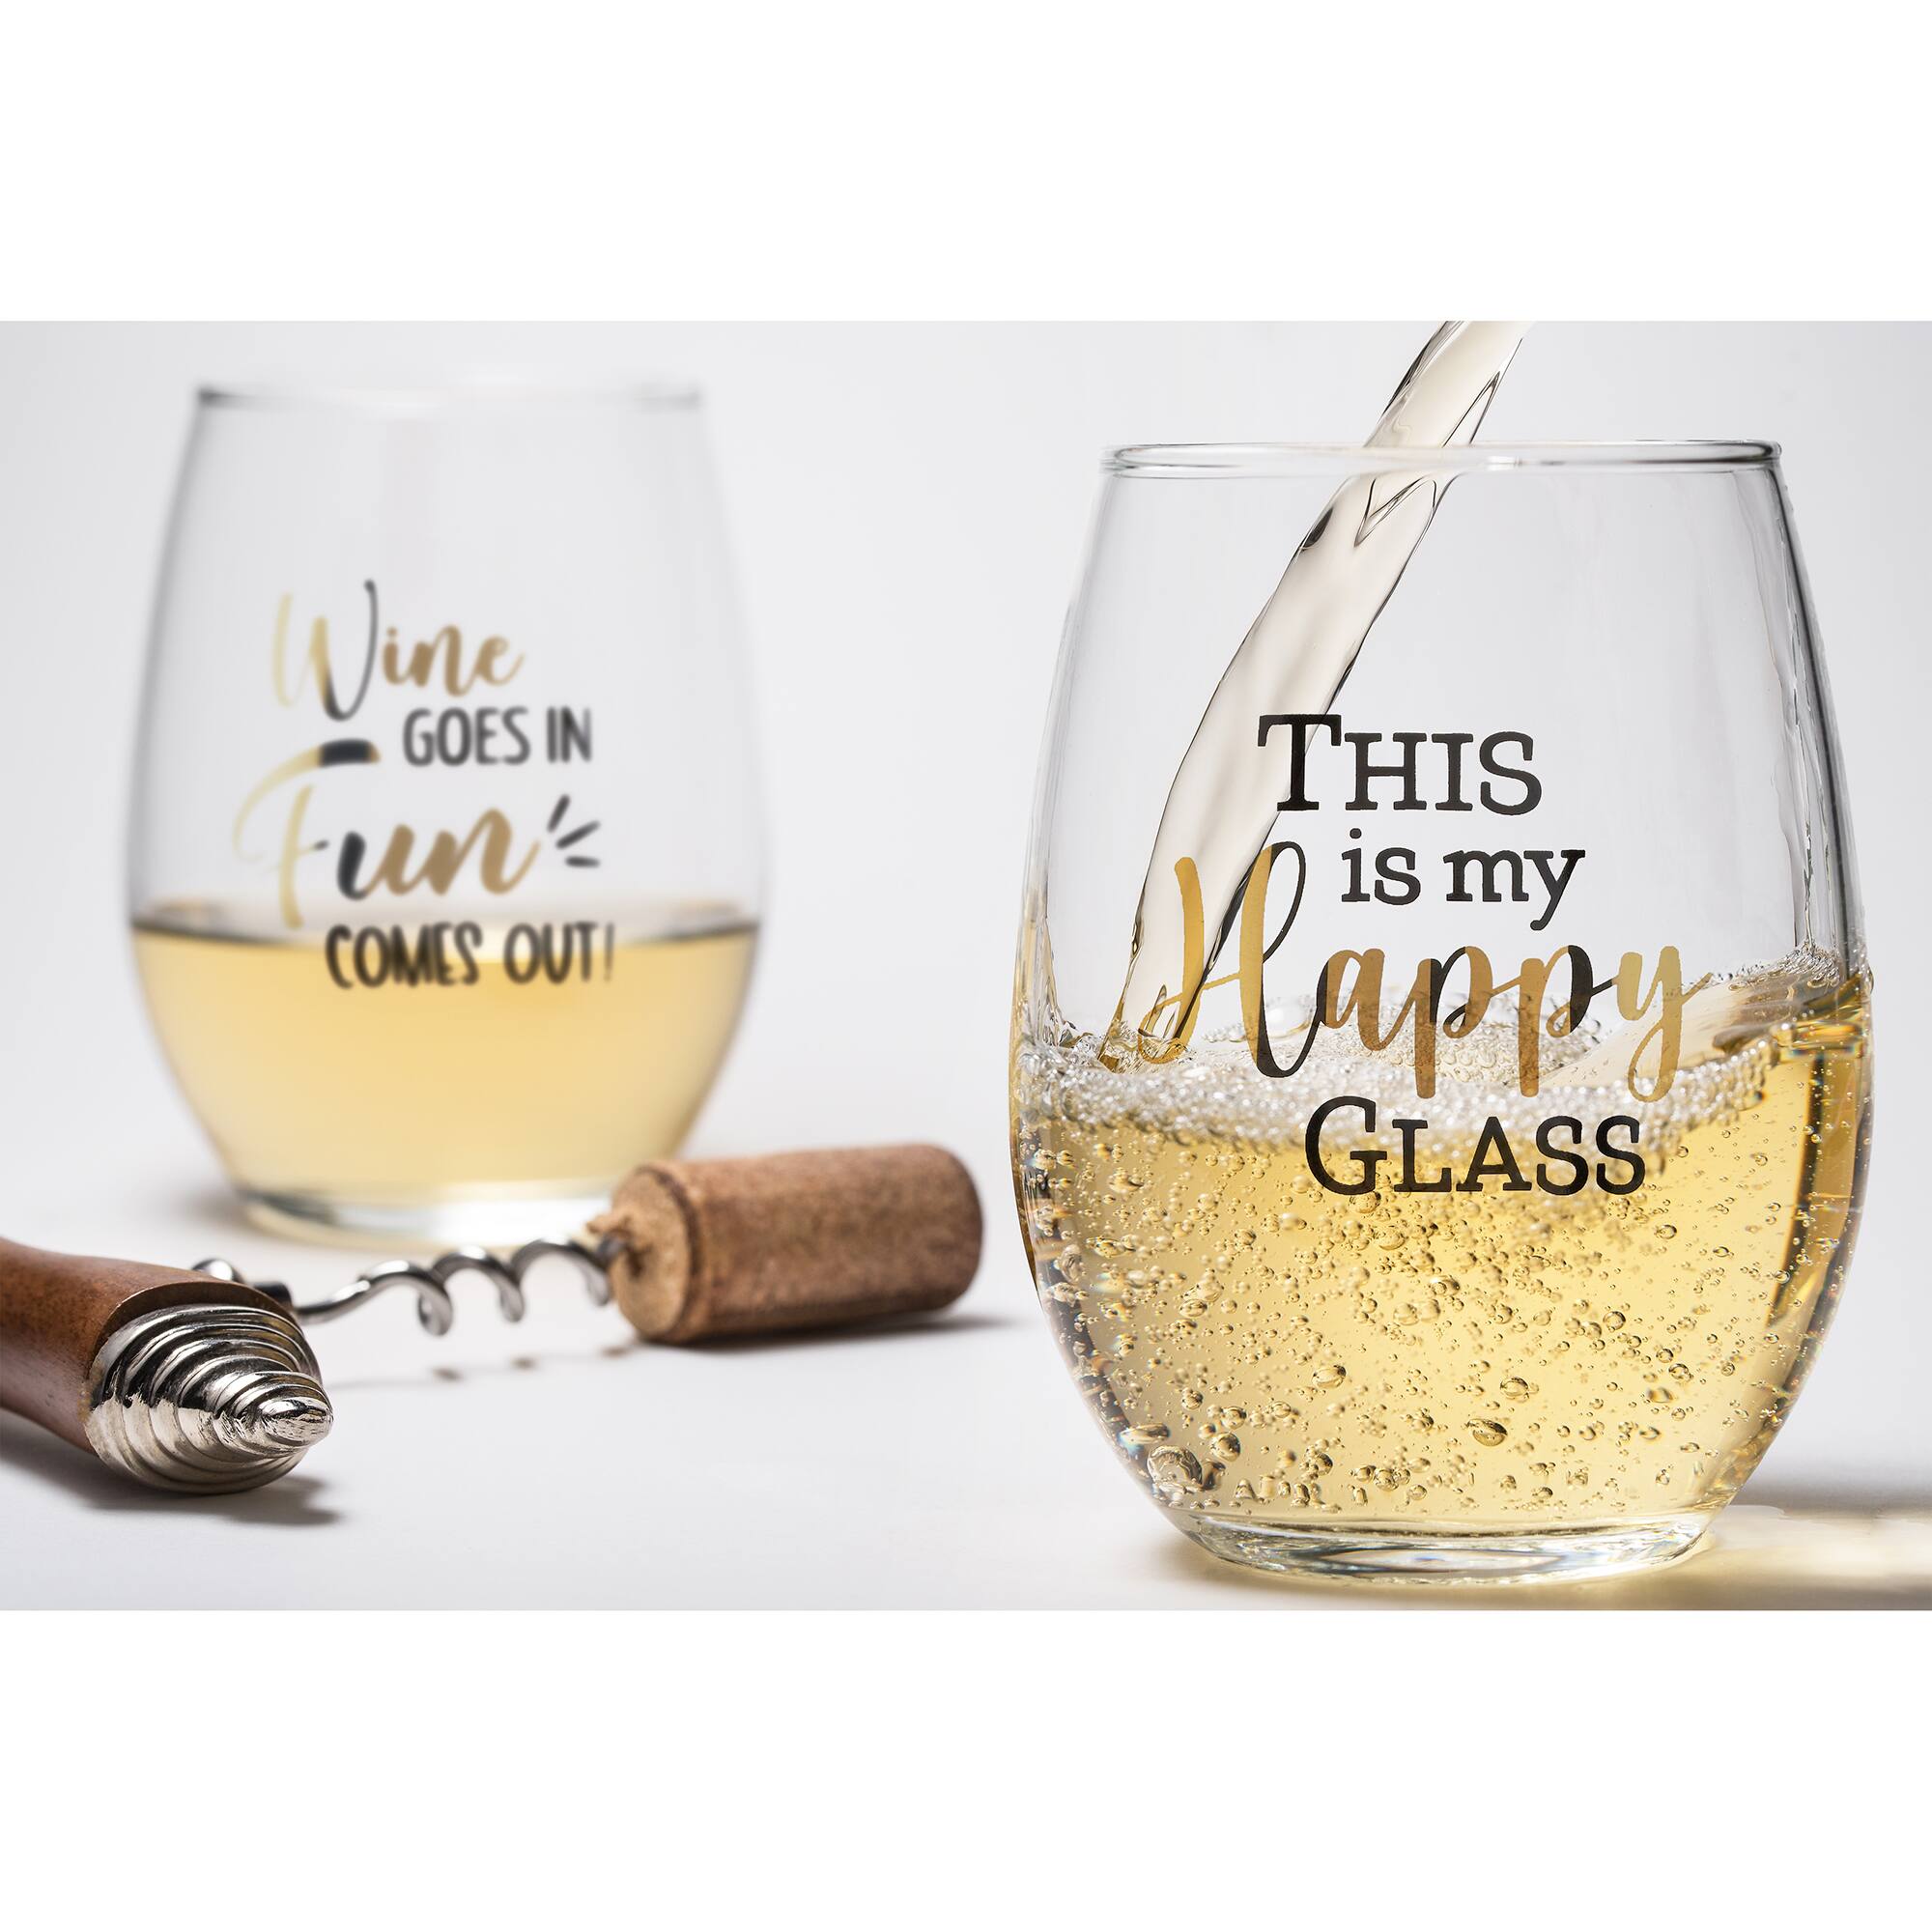 Humour Glittered Wine Glass Gift SALE 